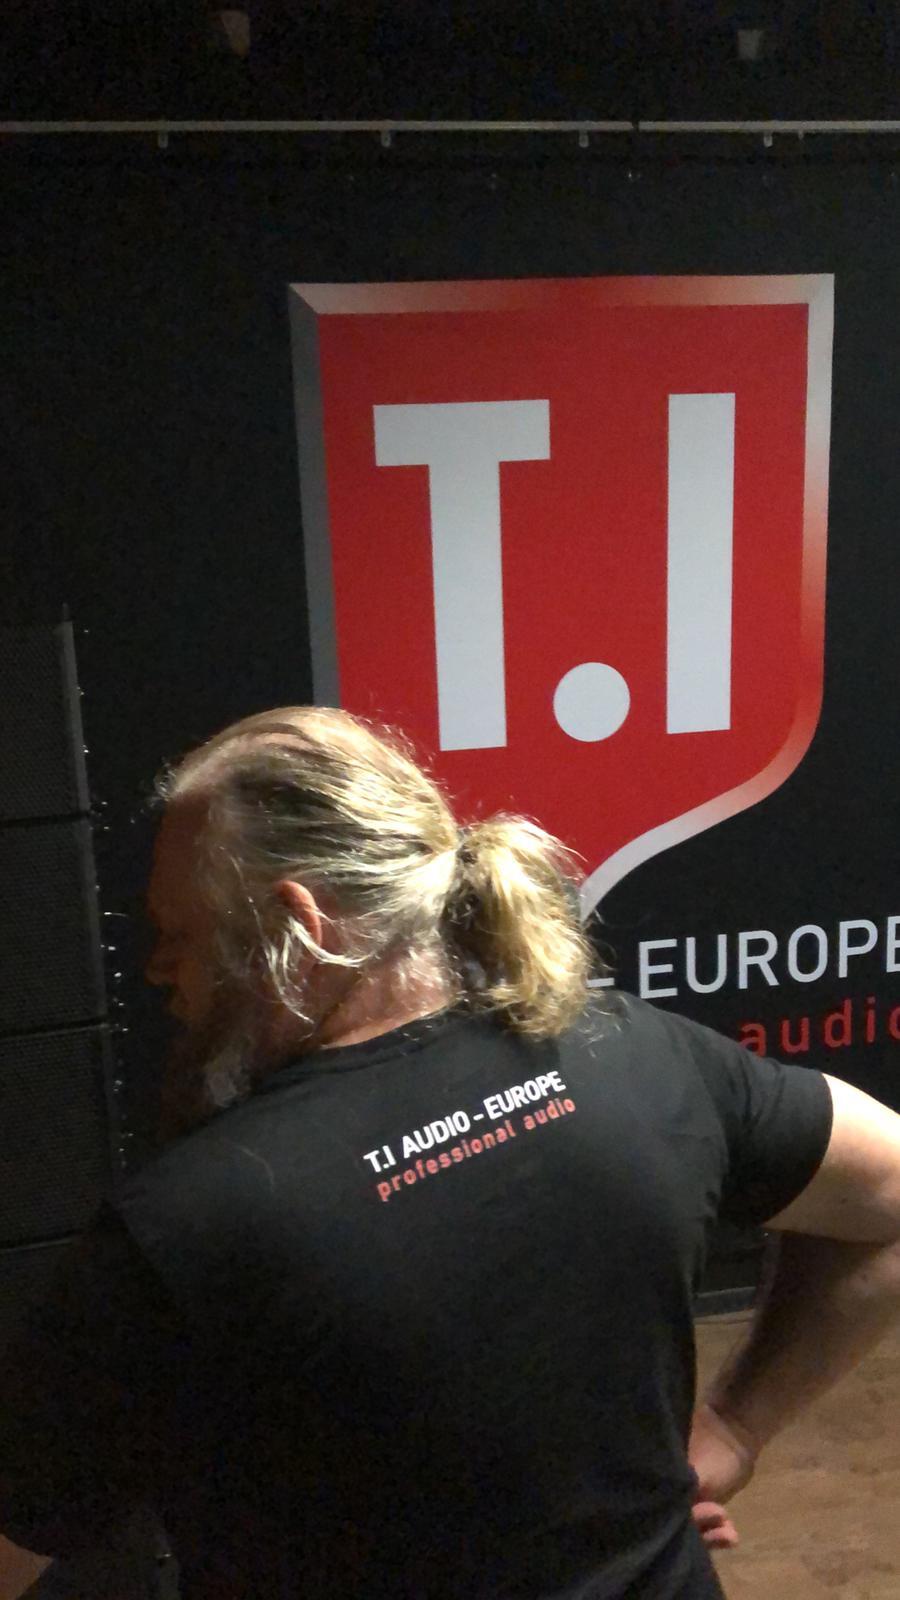 T.I Audio Europe team with great branding setting. Branding,Technology,Marketing Skill,Branding exploring with International class. 